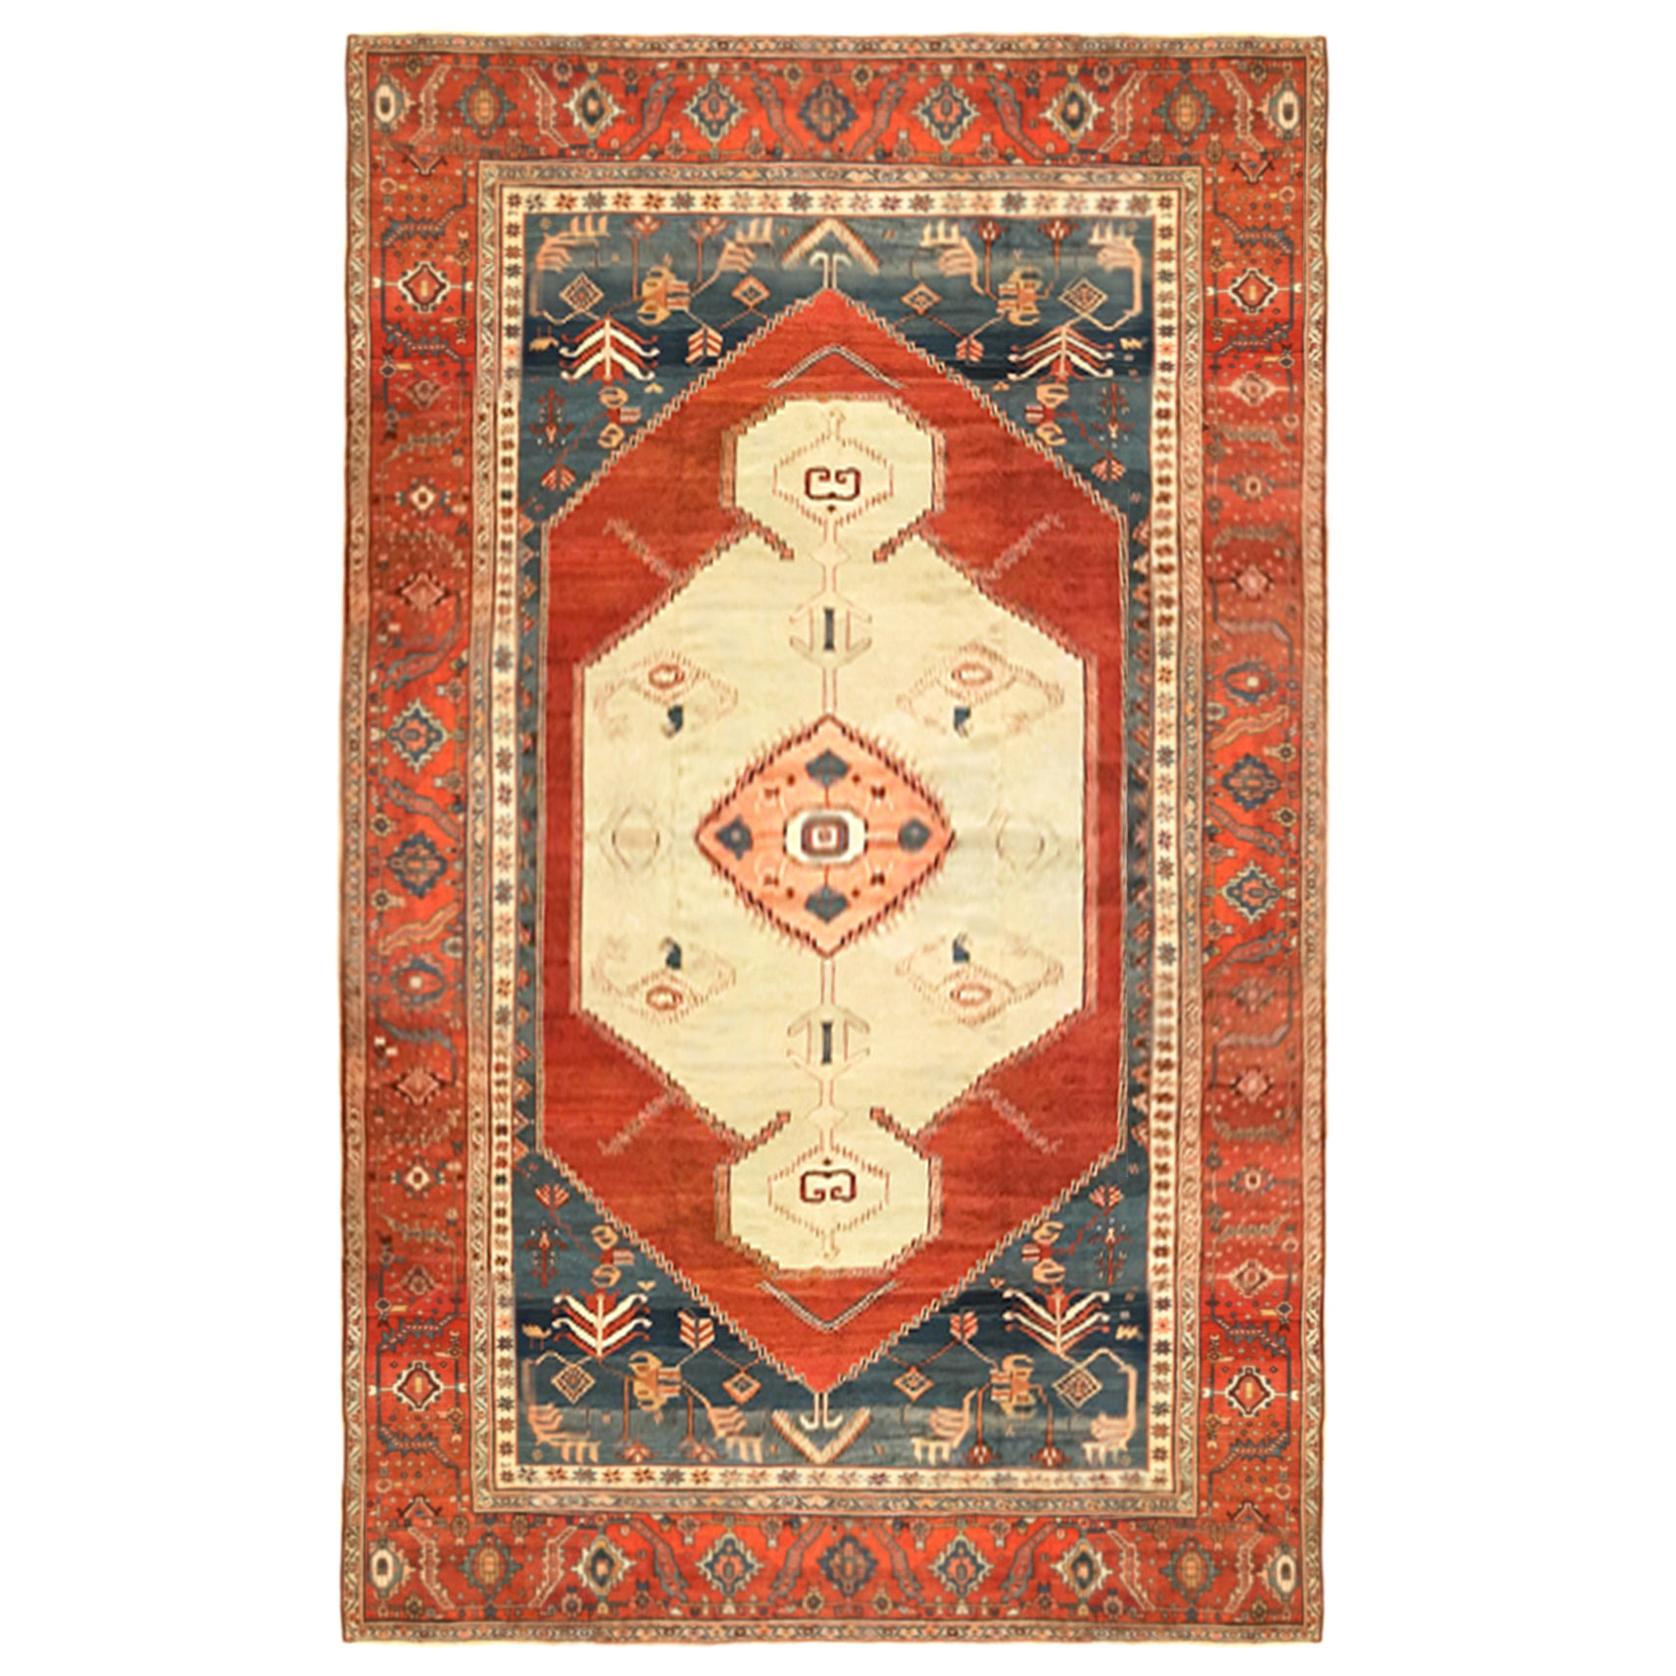 Antique Persian Serapi Bakshaish Oriental Carpet, in Large Size with Soft Colors